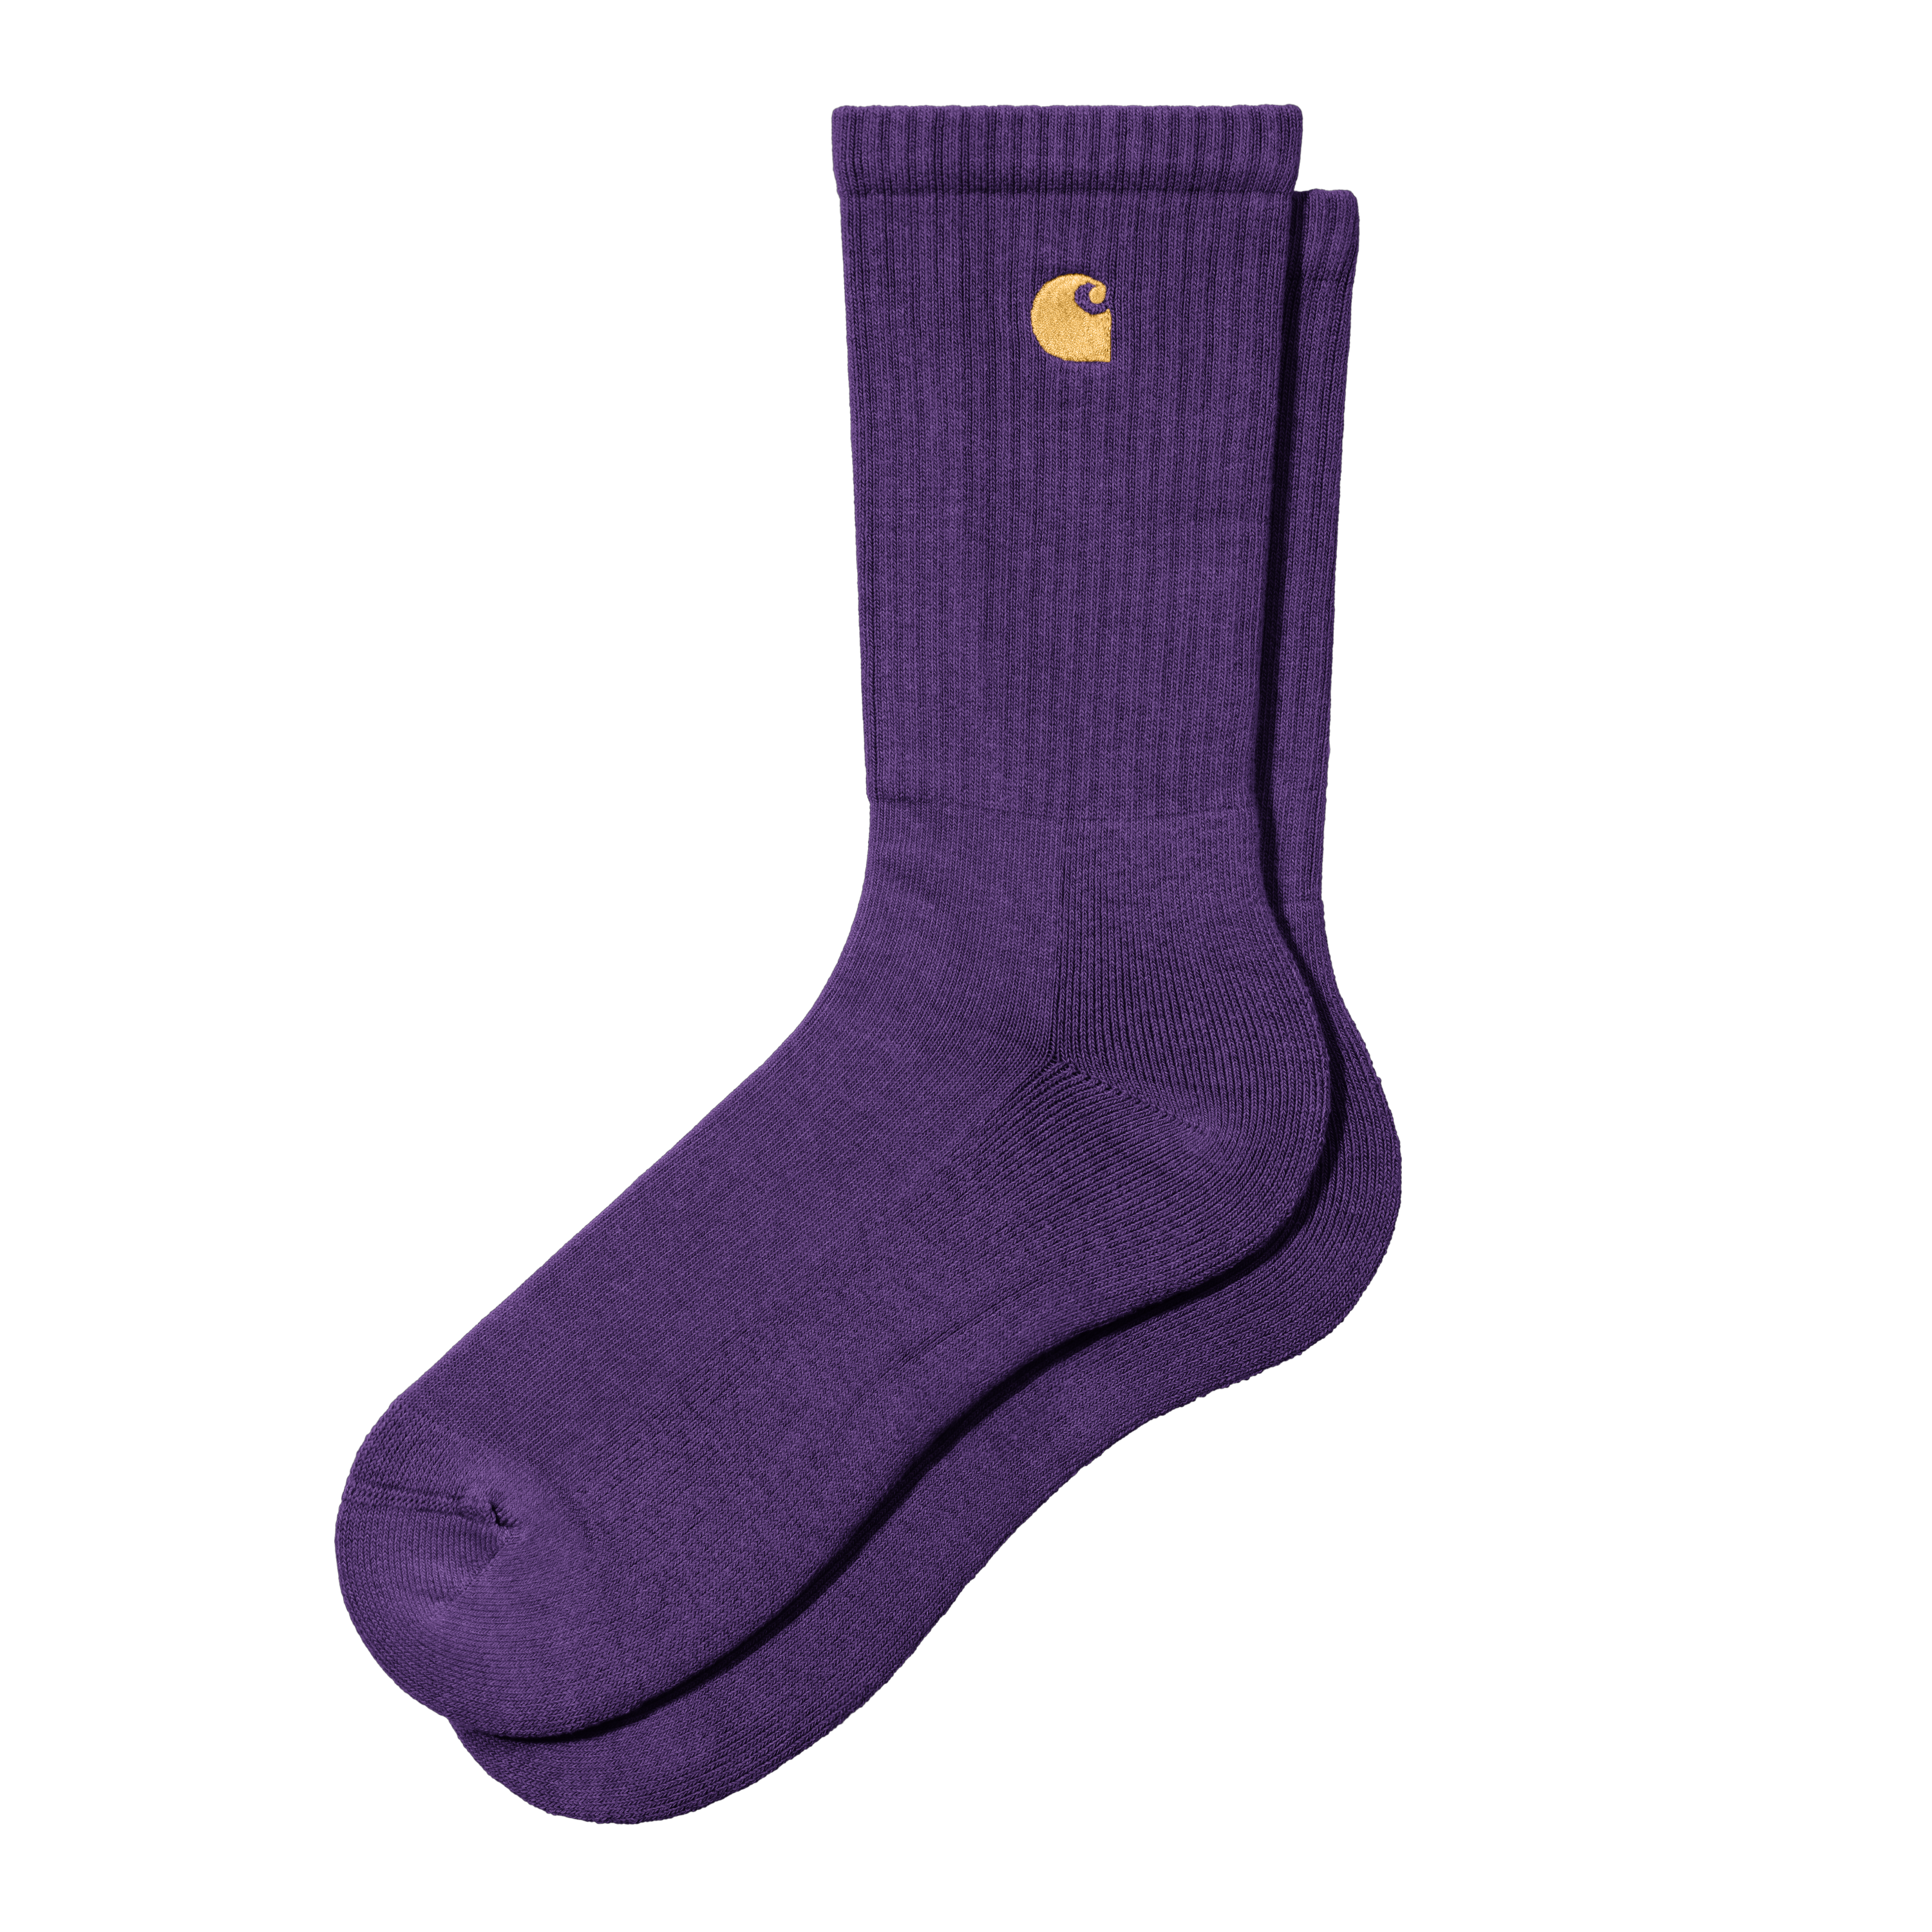 Carhartt WIP Chase Socks in Purple